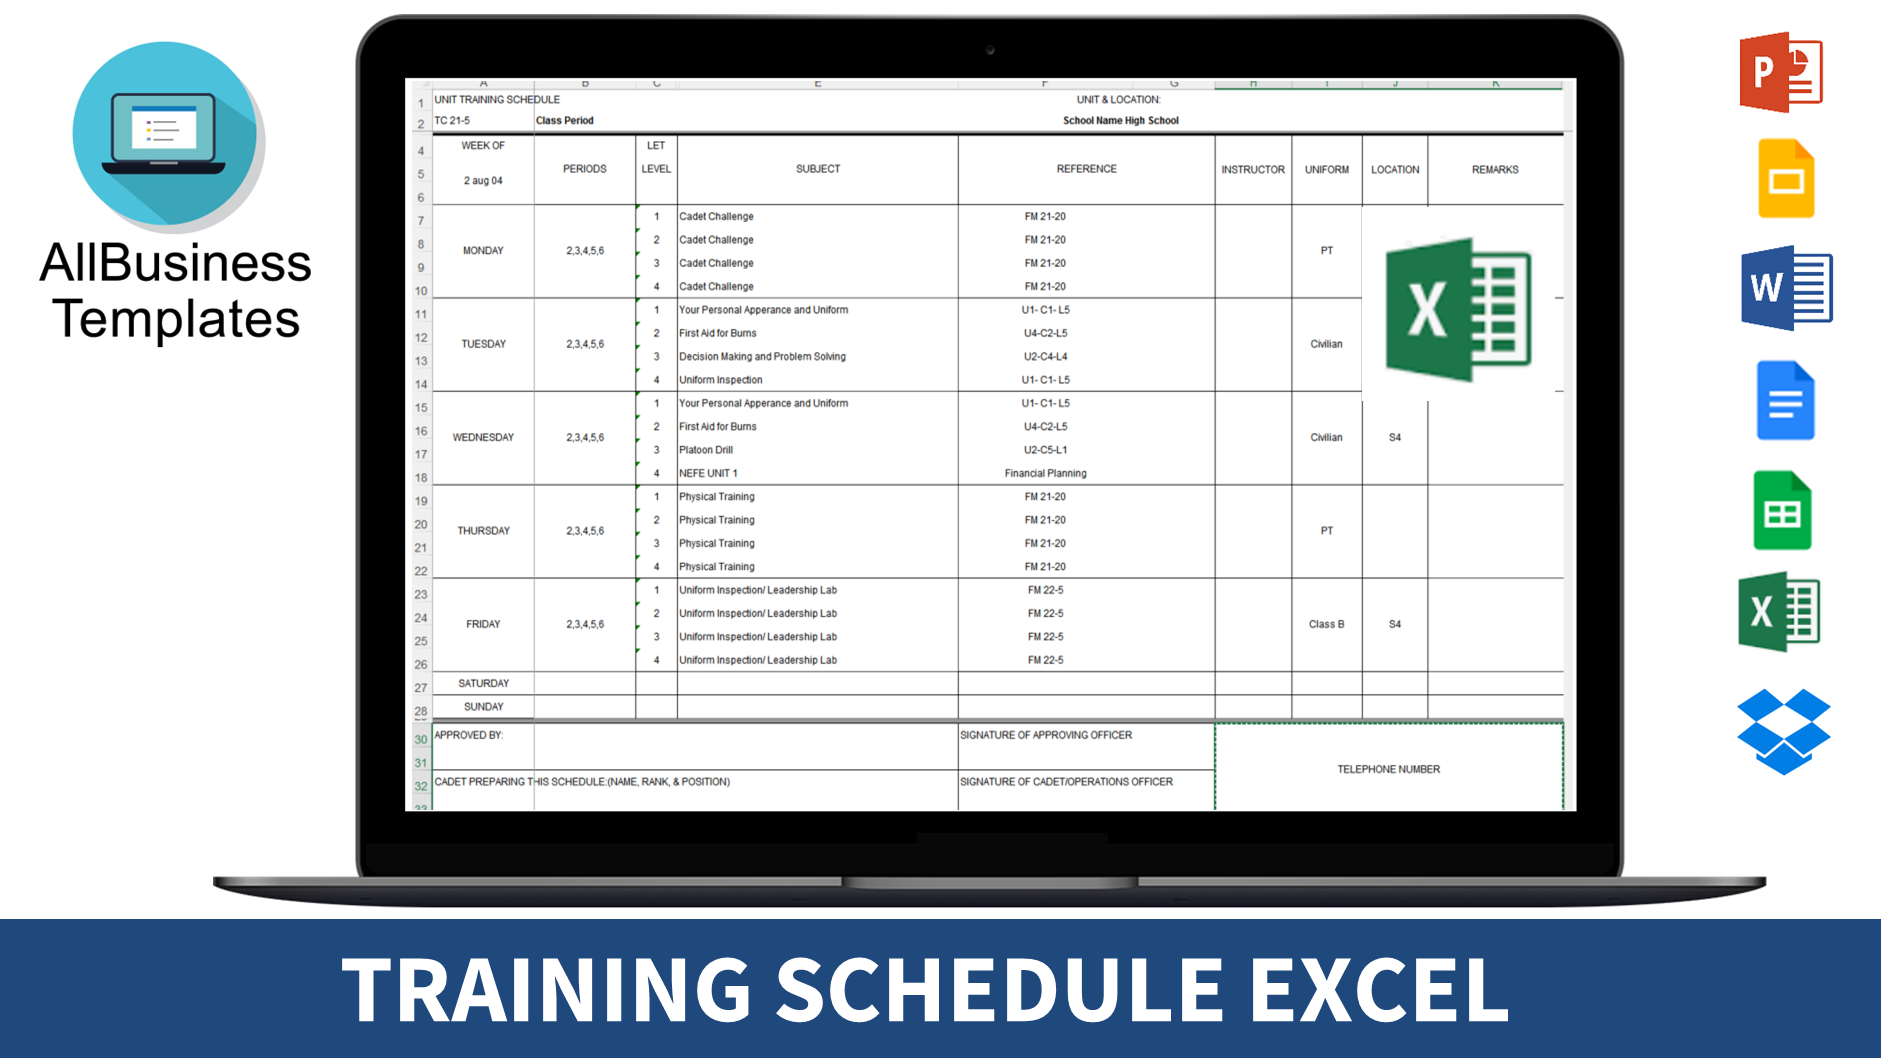 Training Schedule Excel main image